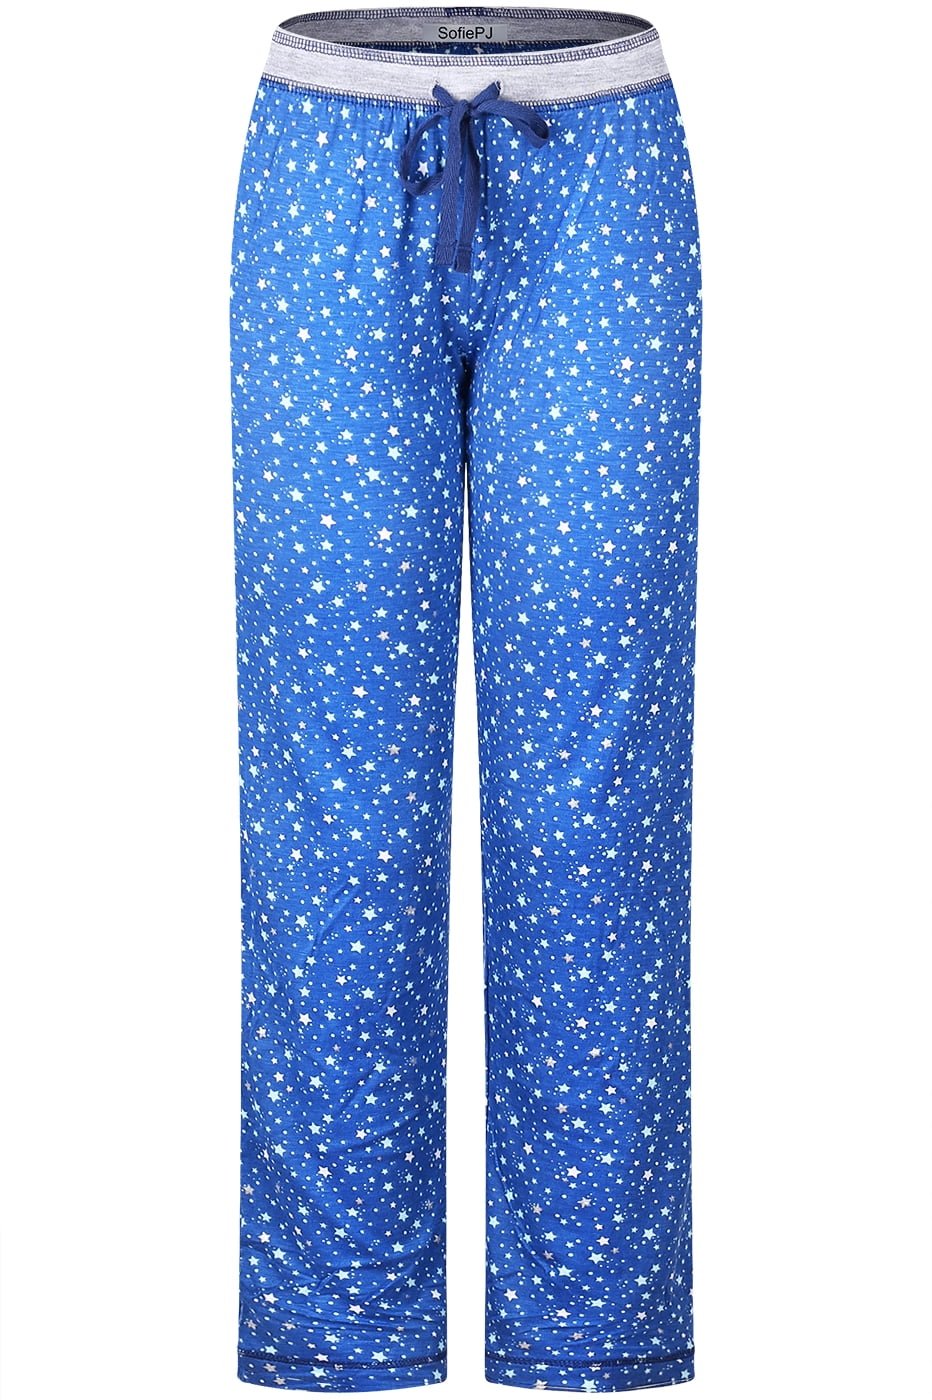 SofiePJ, Women's, Printed Long Sleepwear Lounge Pajama Pants, Blue, S ...